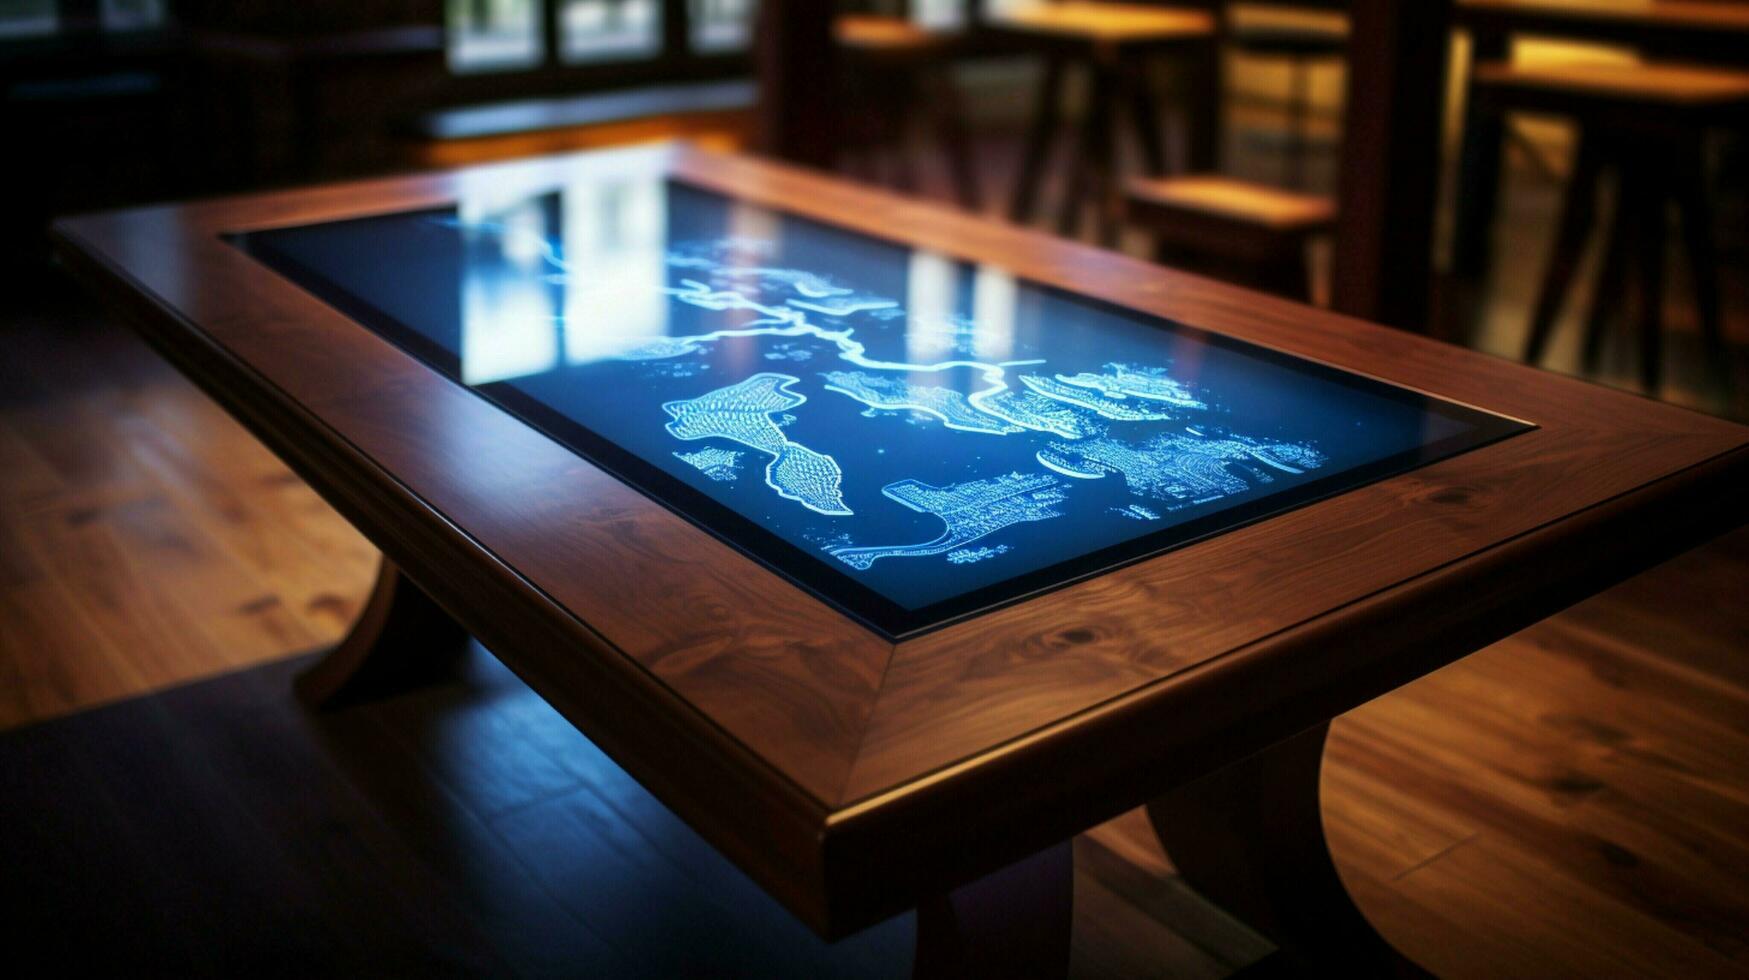 shiny touch screen on wooden table illuminates room photo